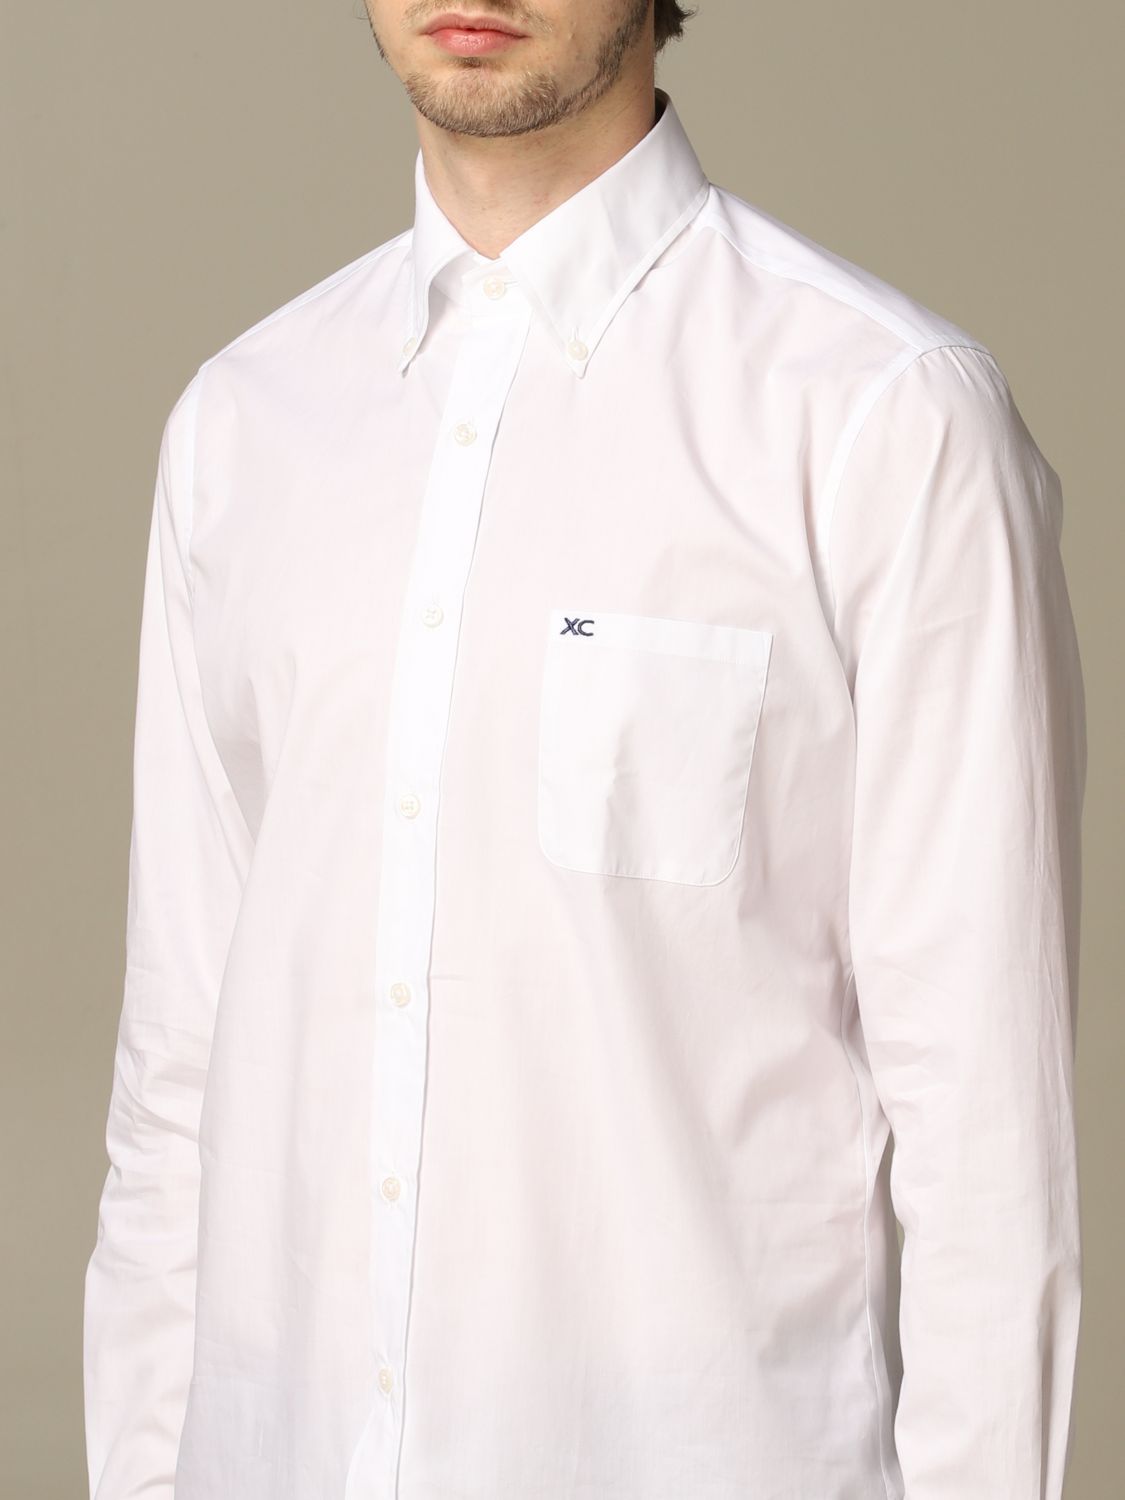 Shirt Xc: Xc shirt for men white 3